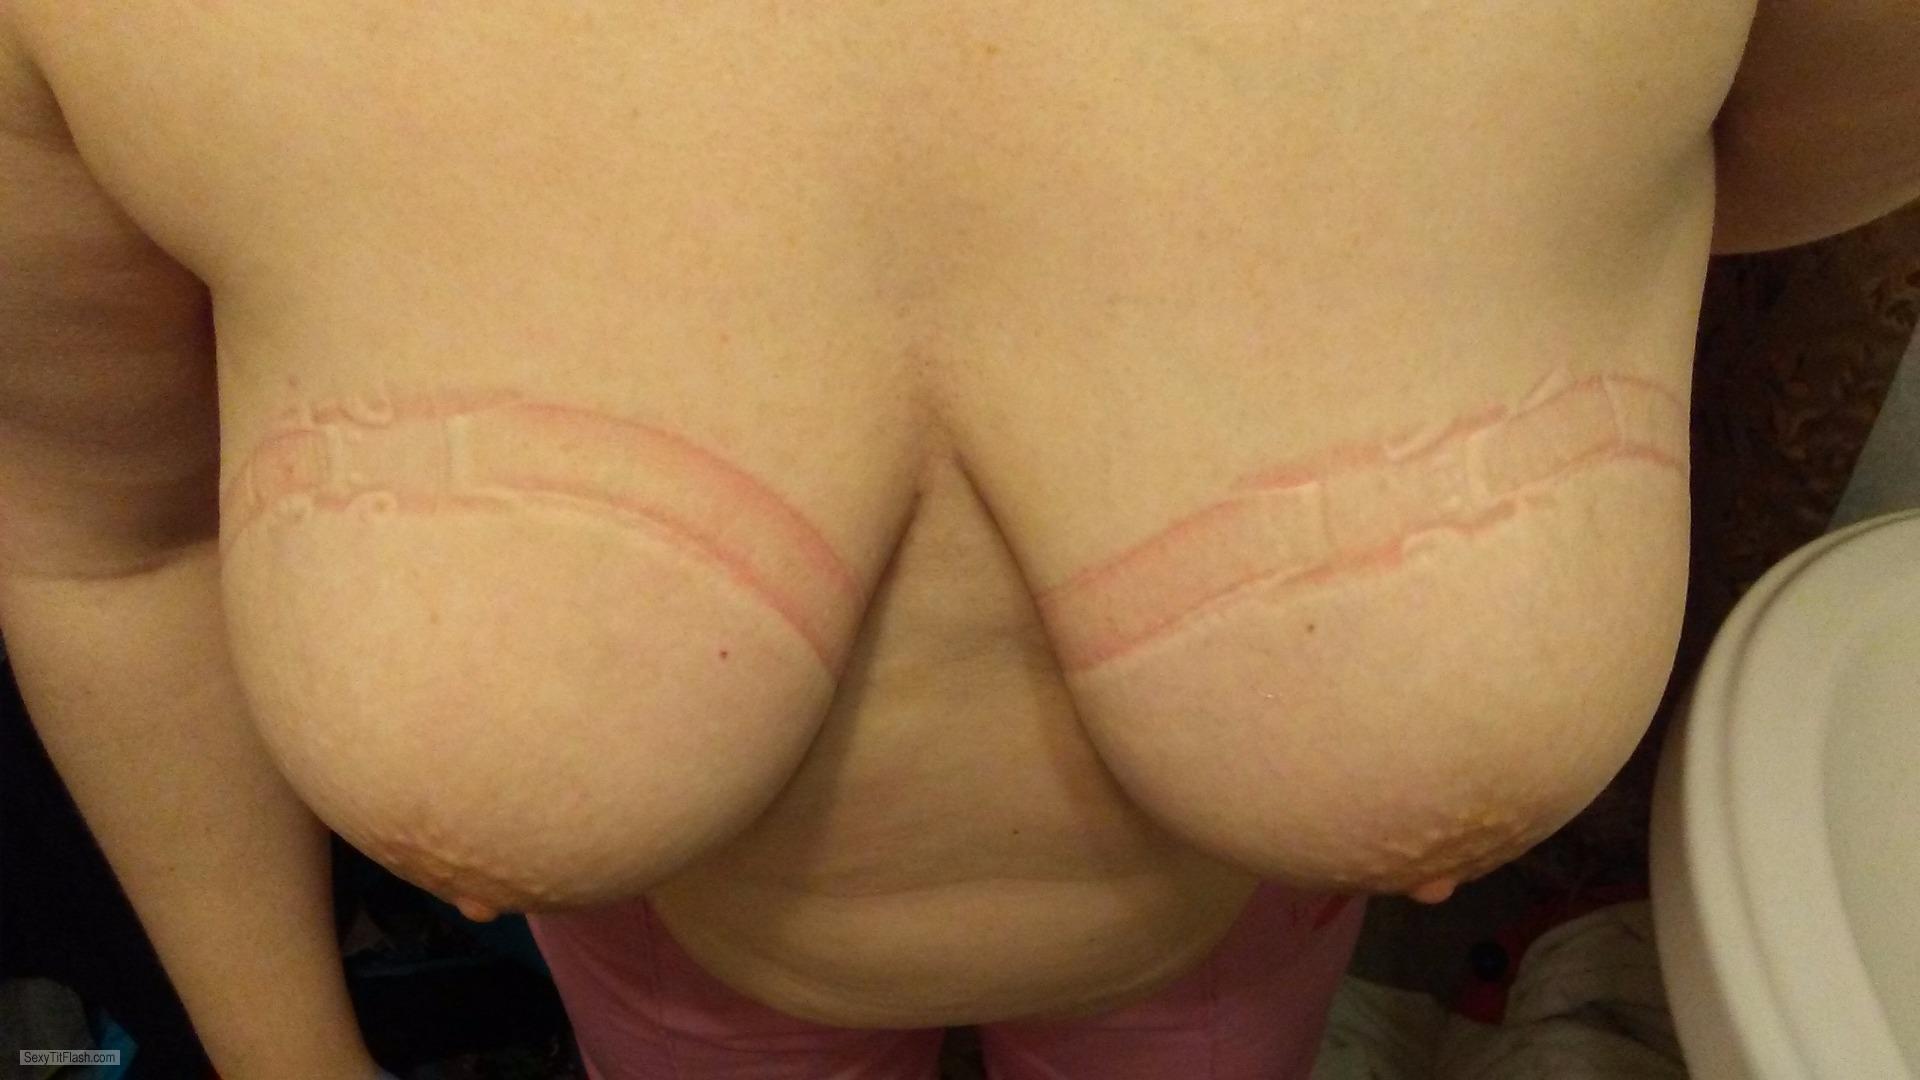 Tit Flash: My Medium Tits - Pennylane from United States